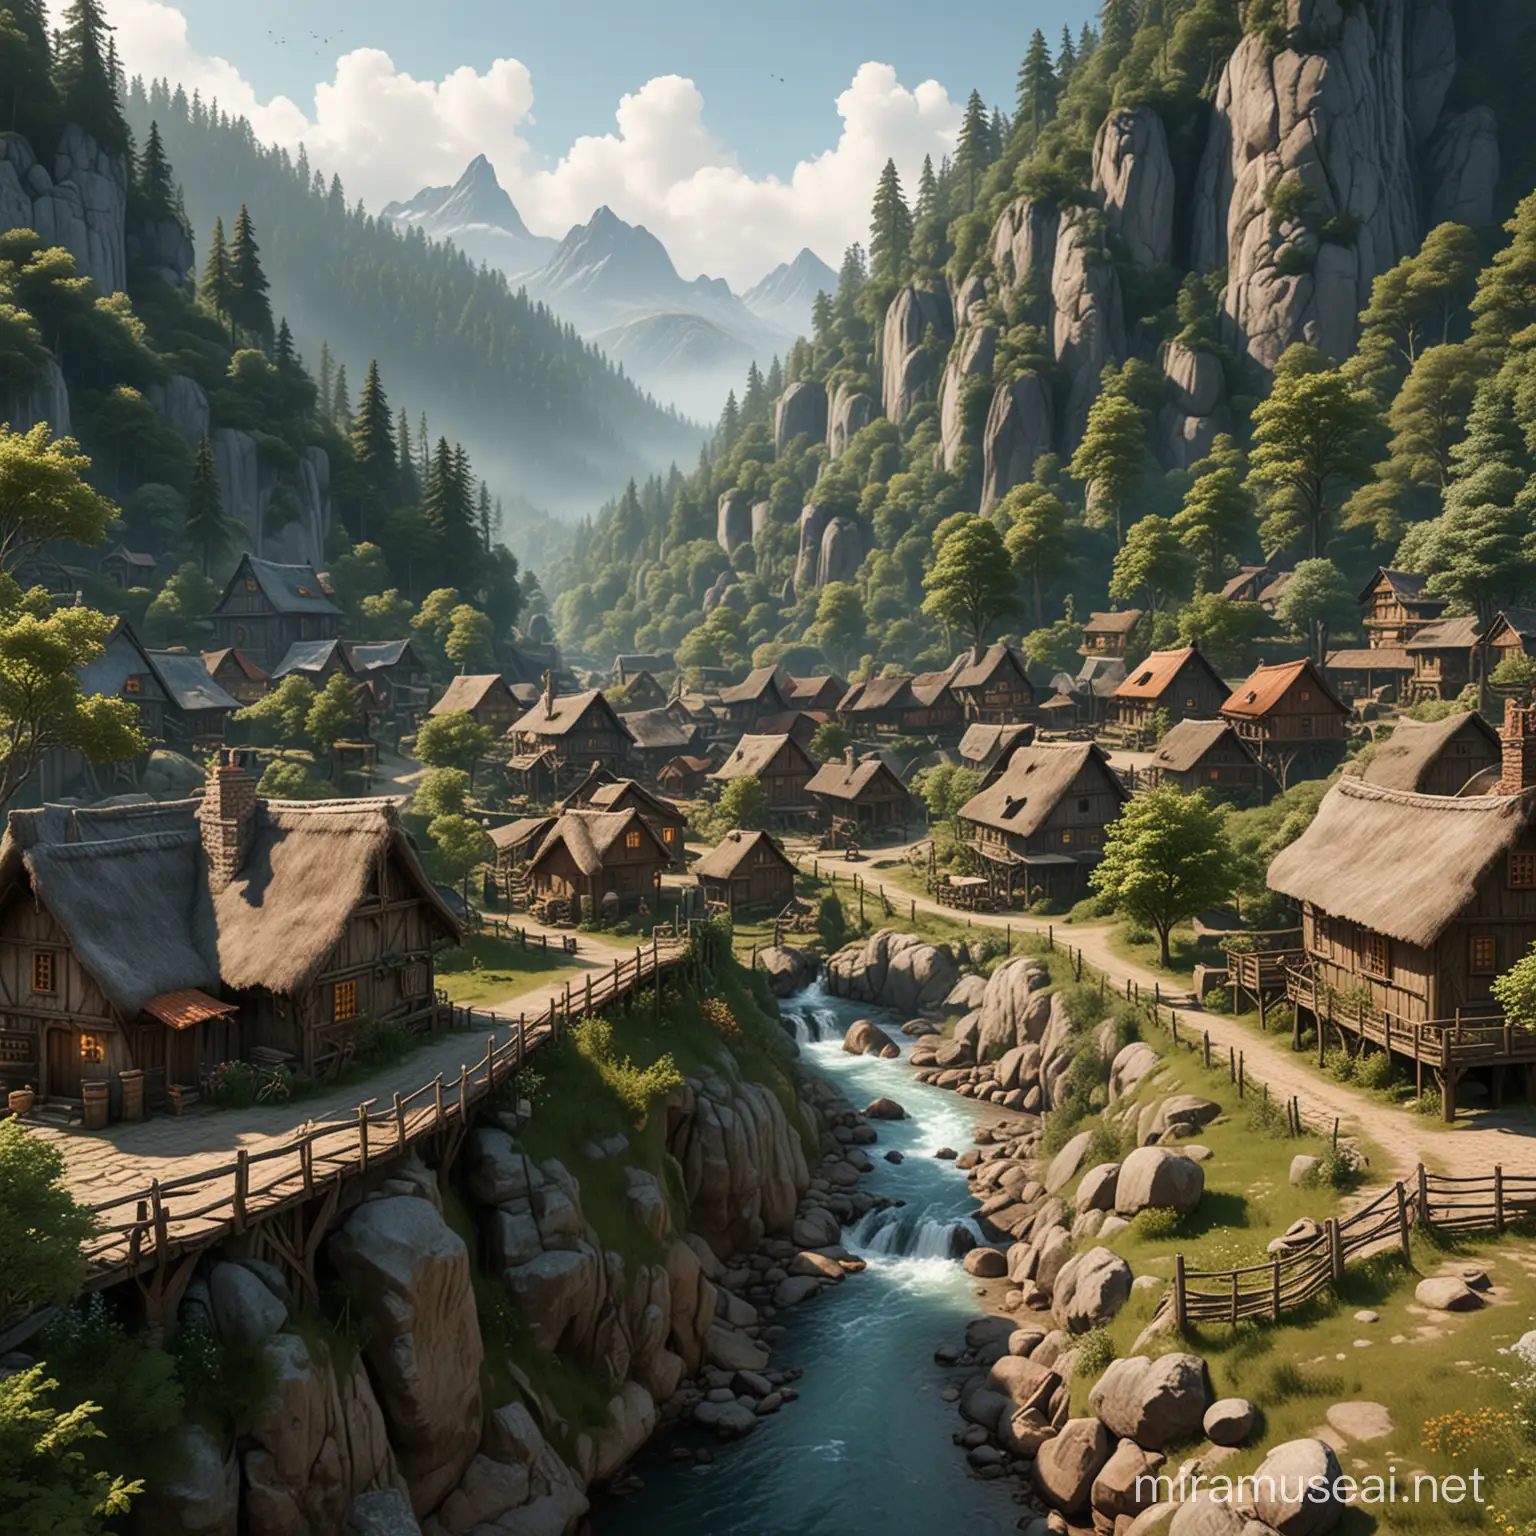 Enchanted Forest Village Captivating yet Earthy Scene